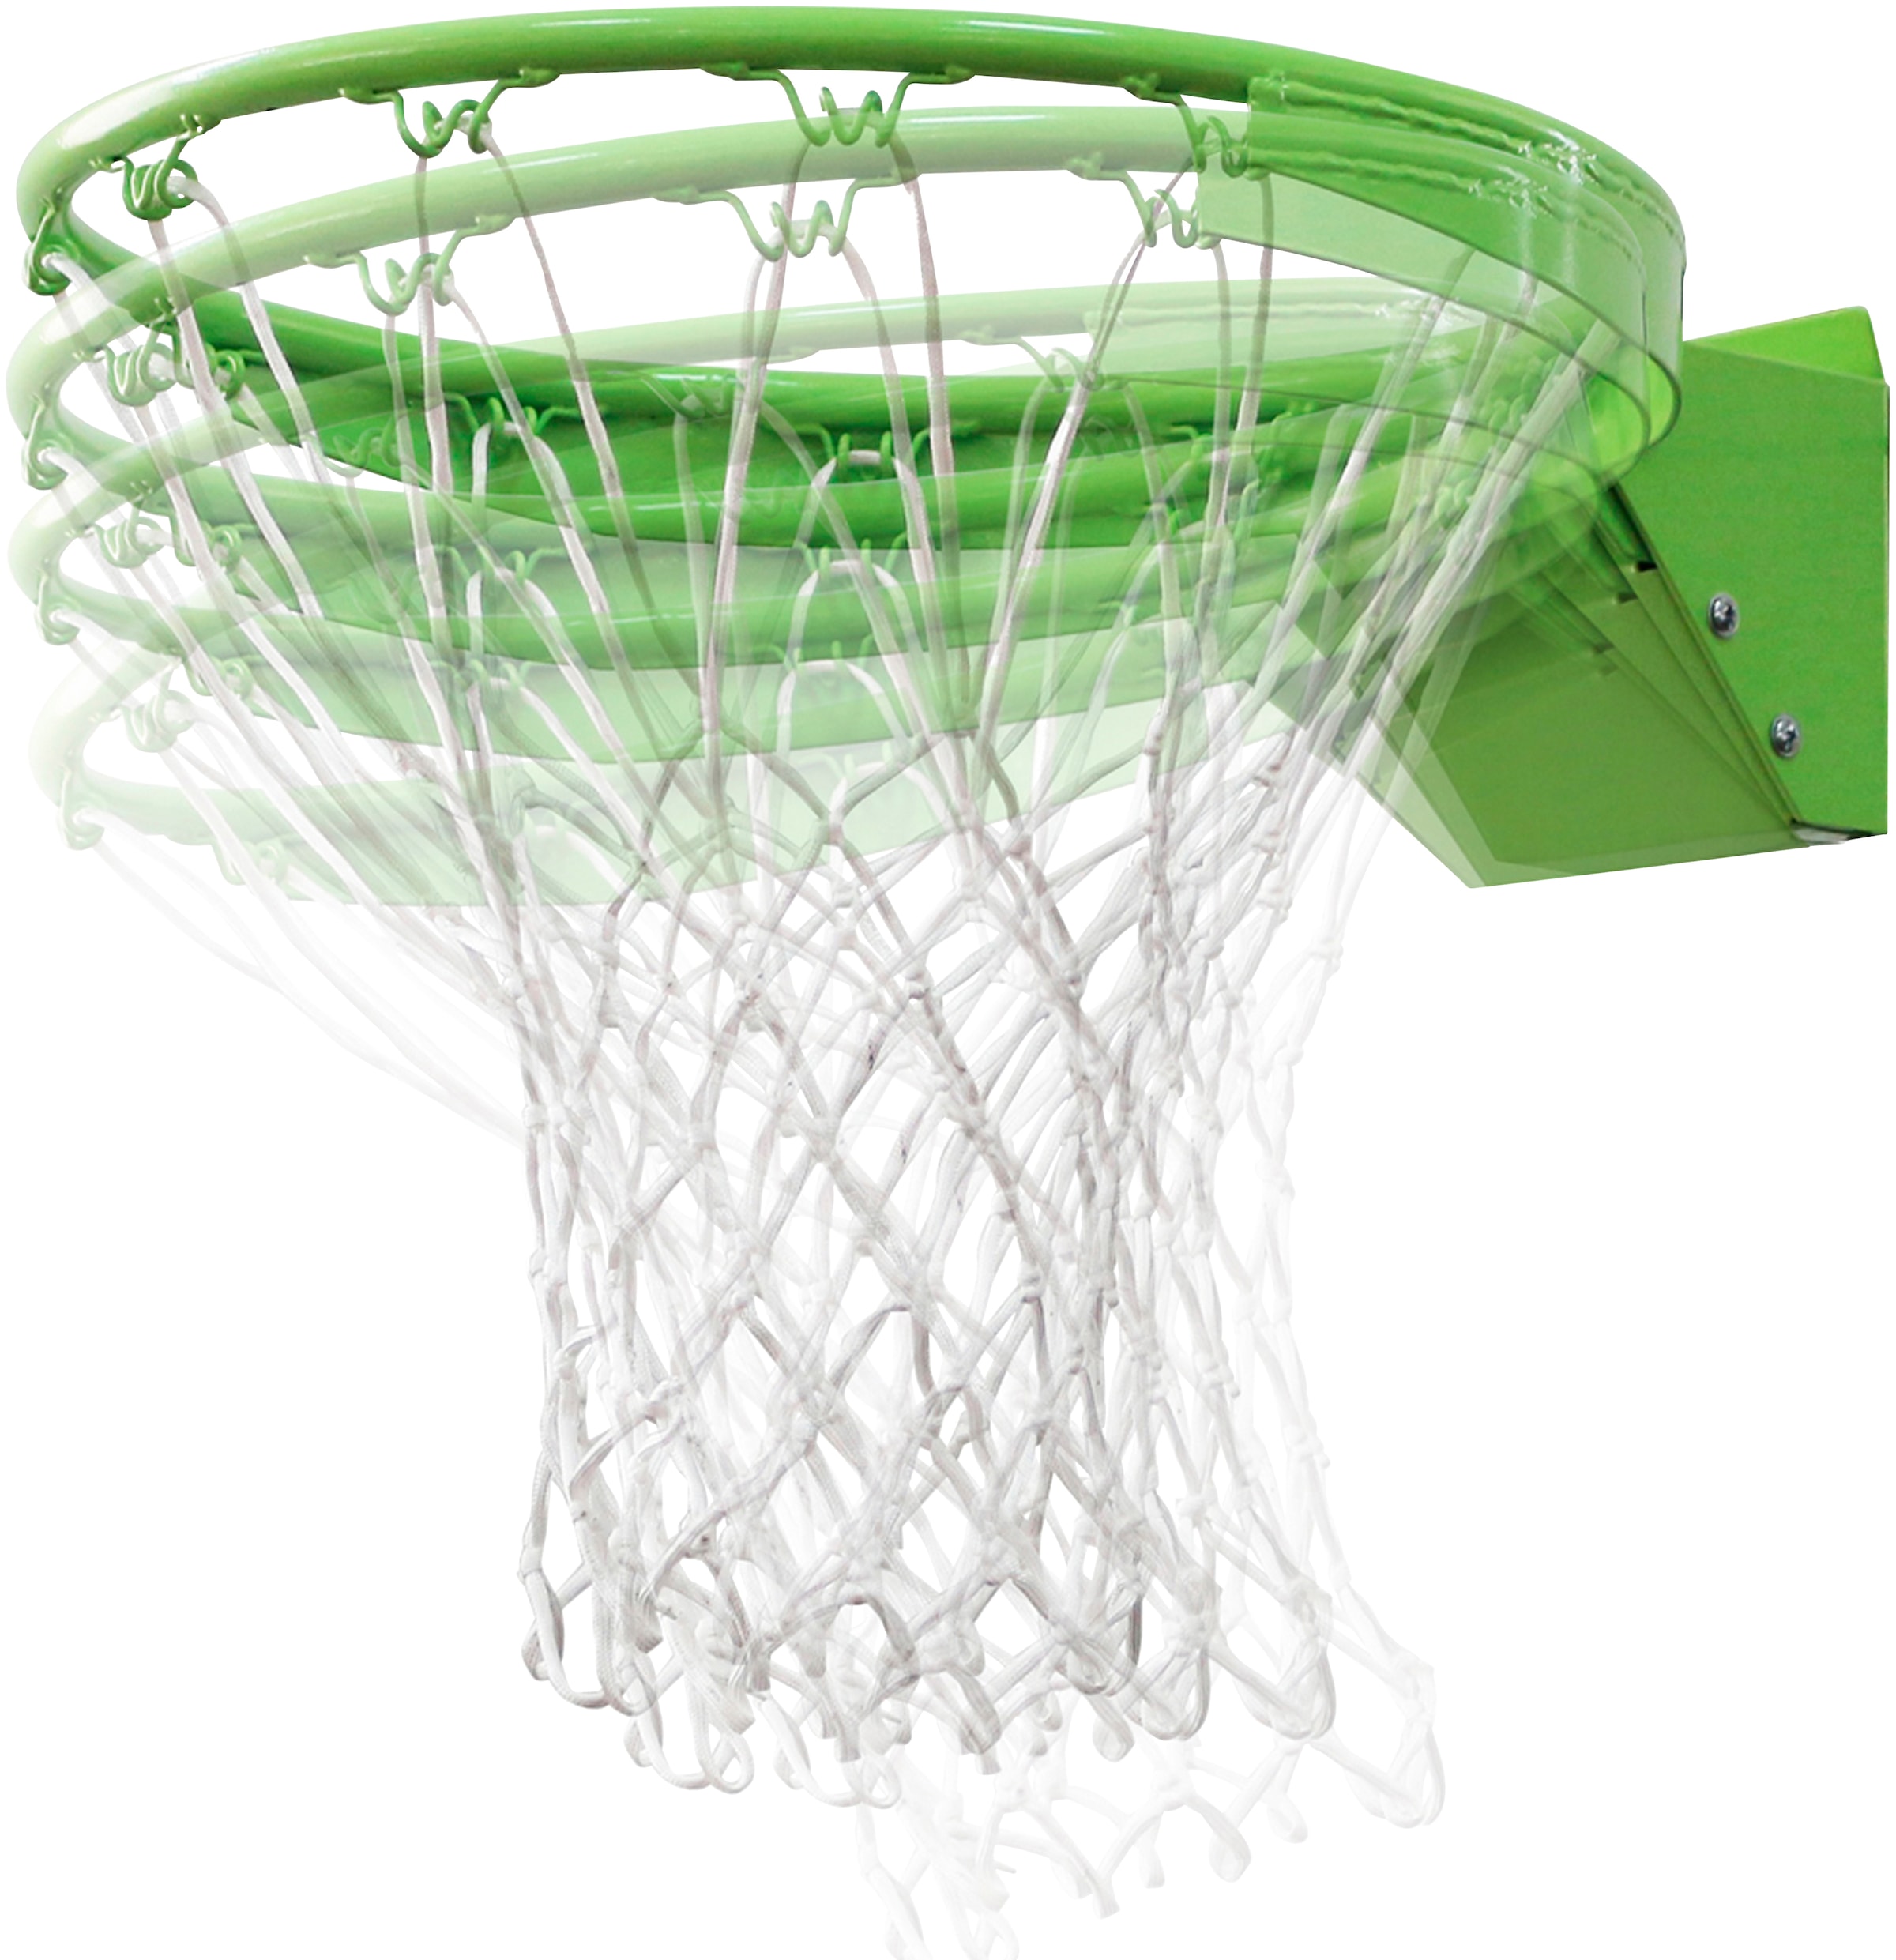 EXIT Basketballkorb »Galaxy«, Ø: 45 cm, Dunkring mit Netz